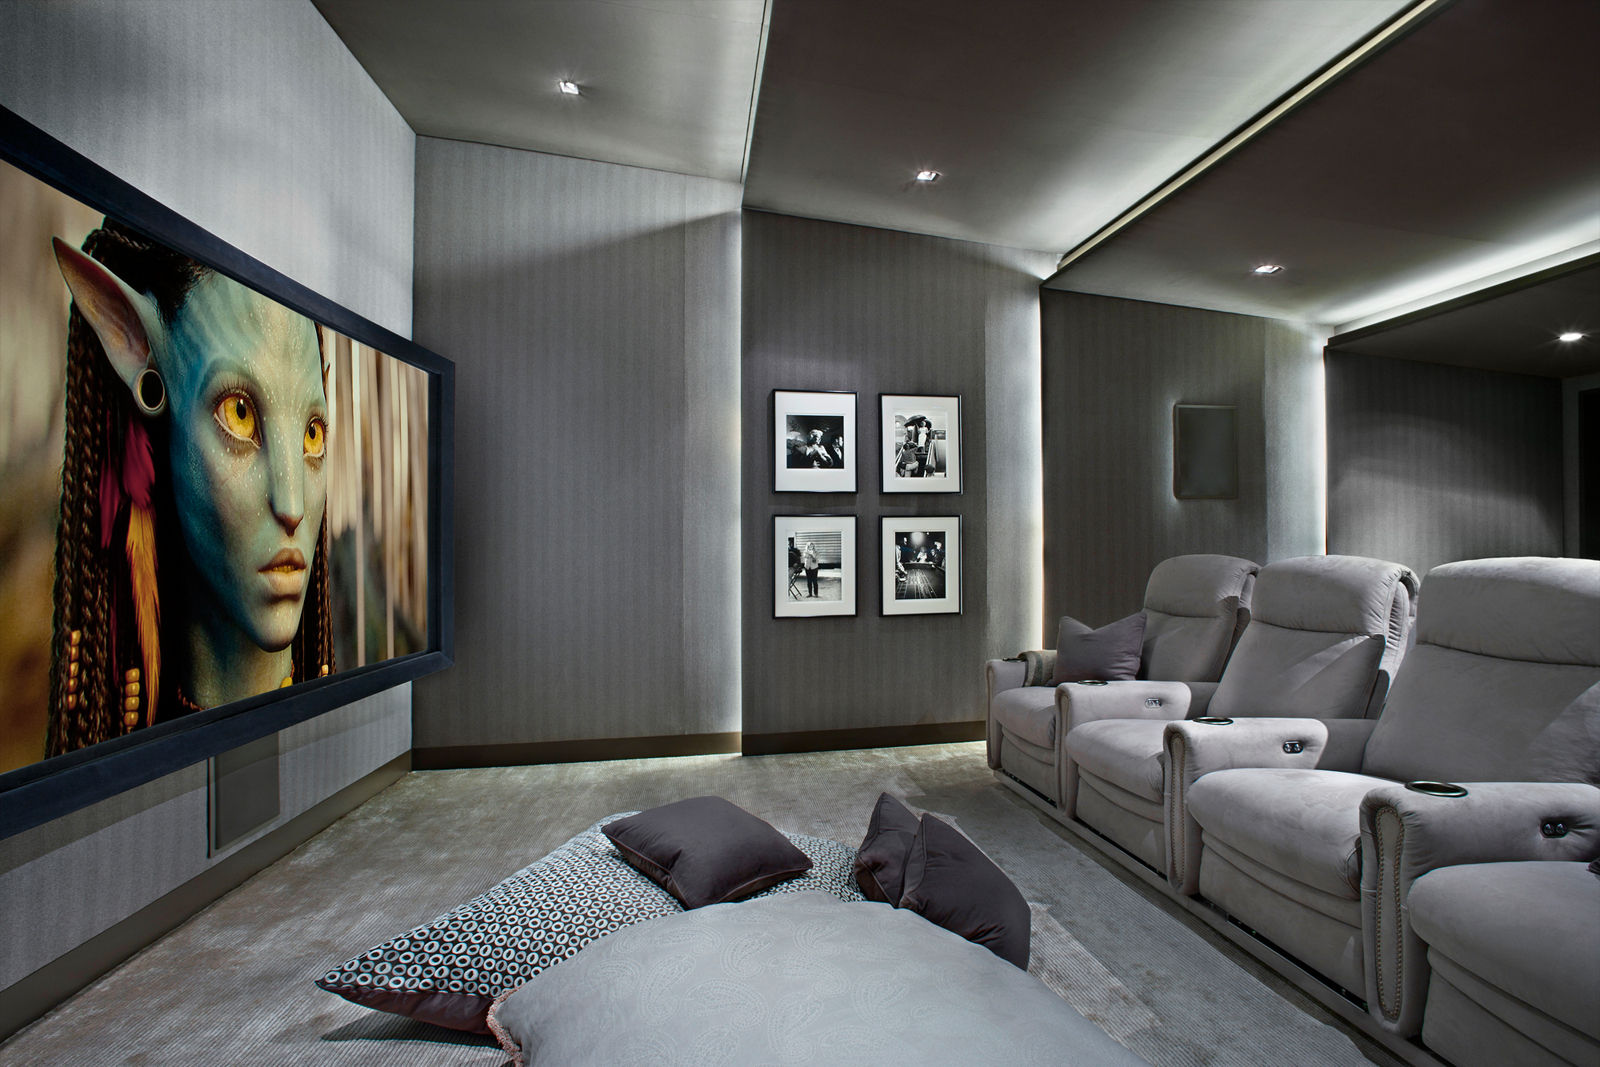 Cool Contemporary Interior Design Pictures - Luxurious ...